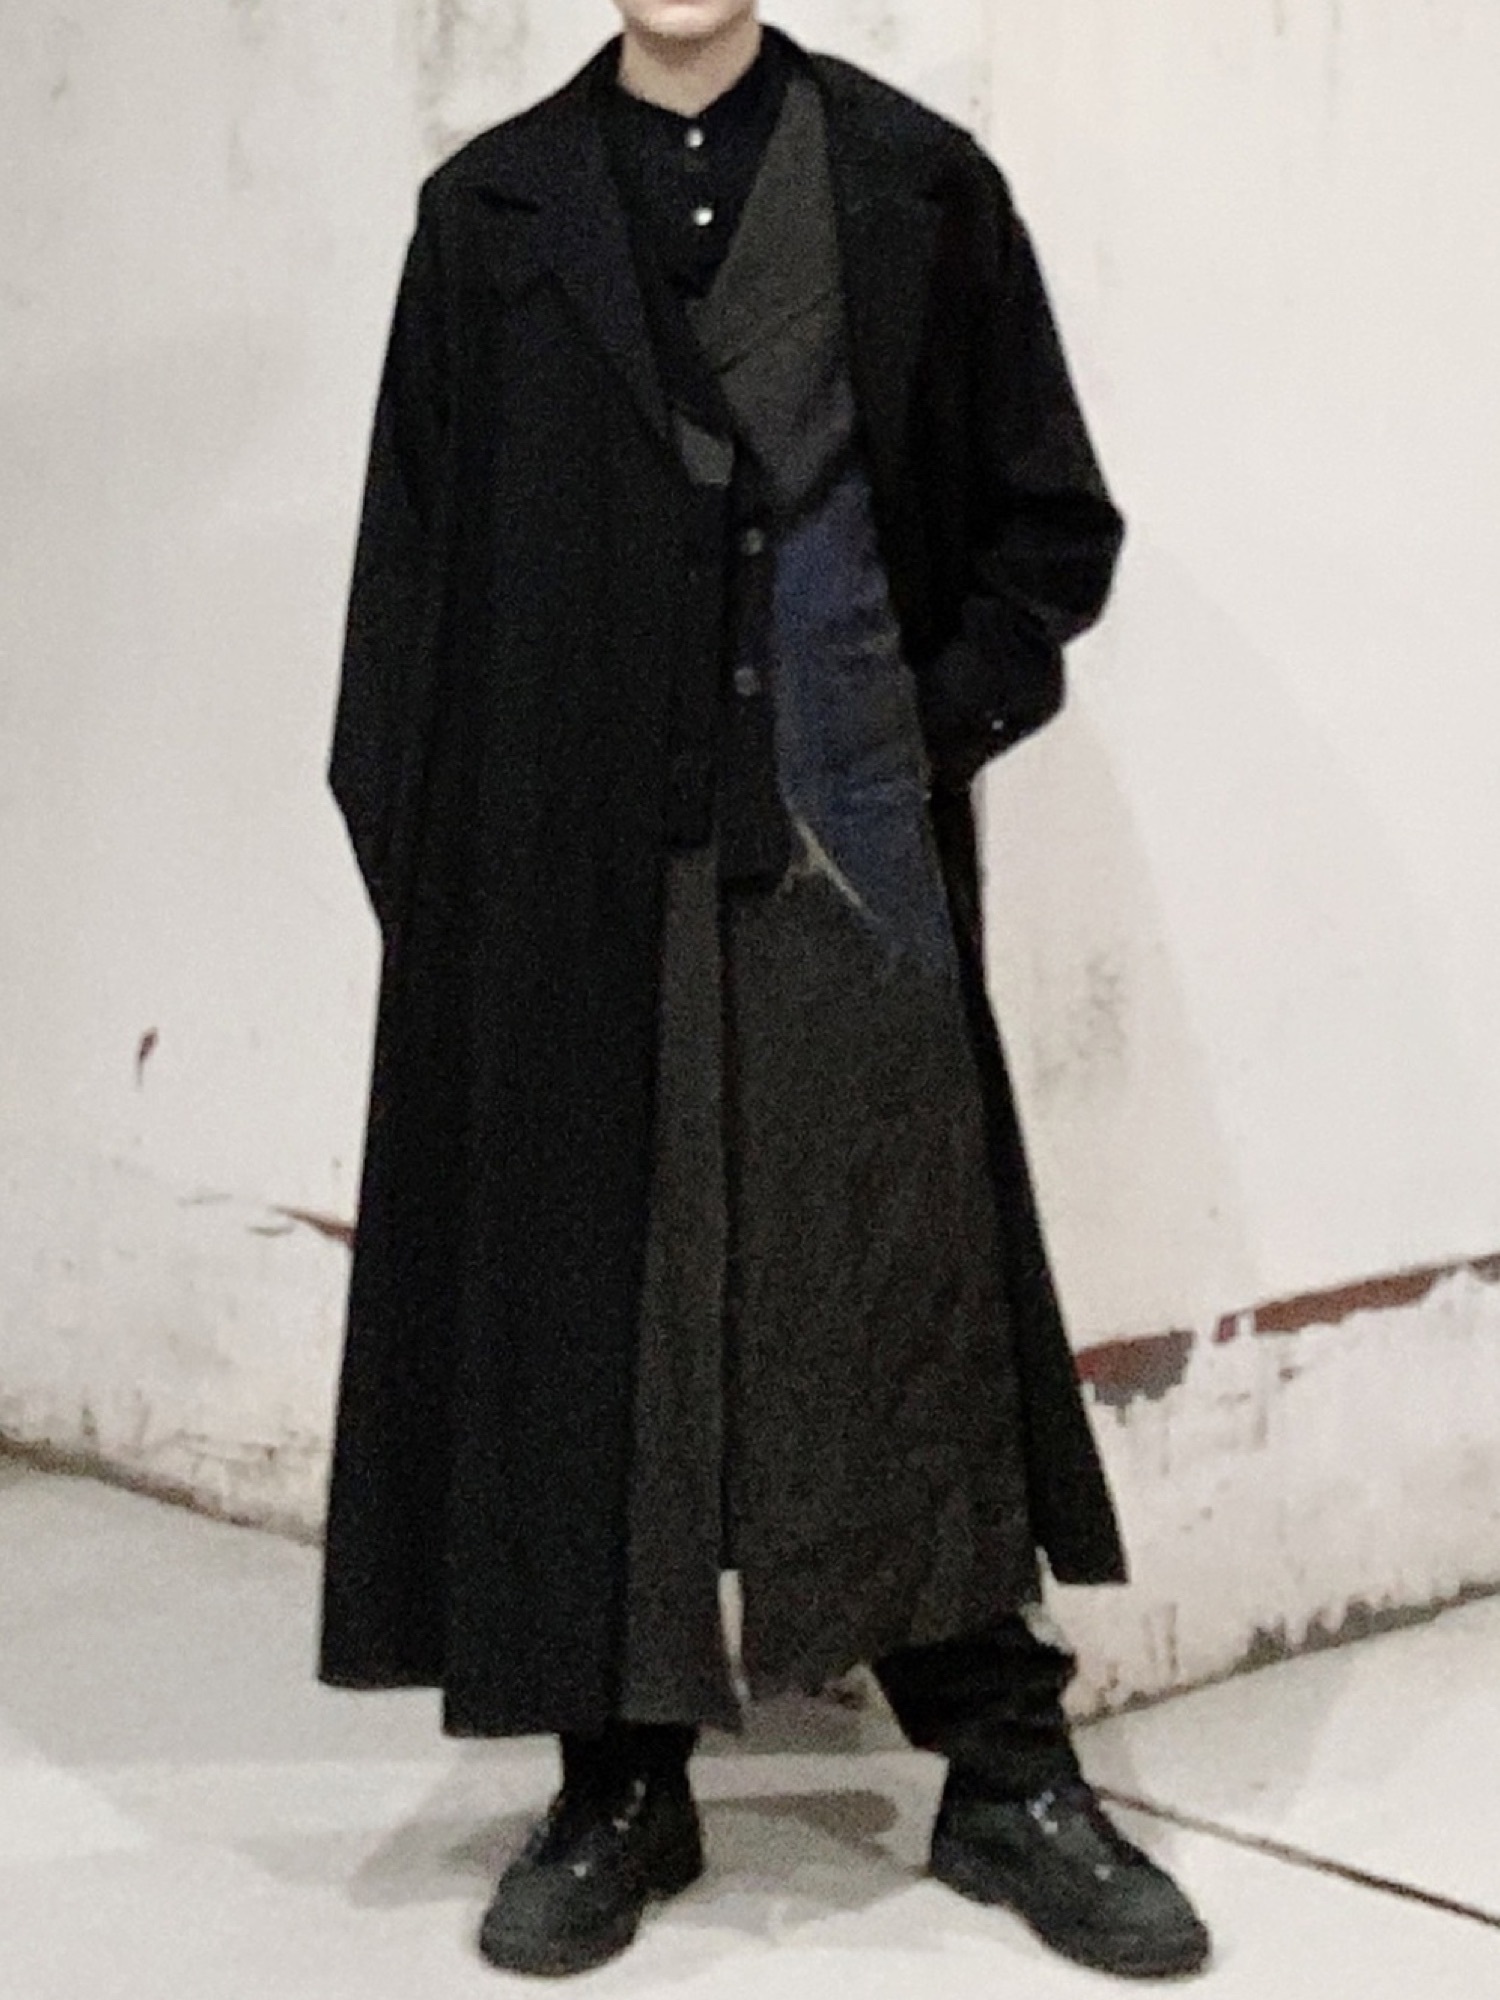 Yohji Yamamoto POUR HOMMEのステンカラーコートを使った人気